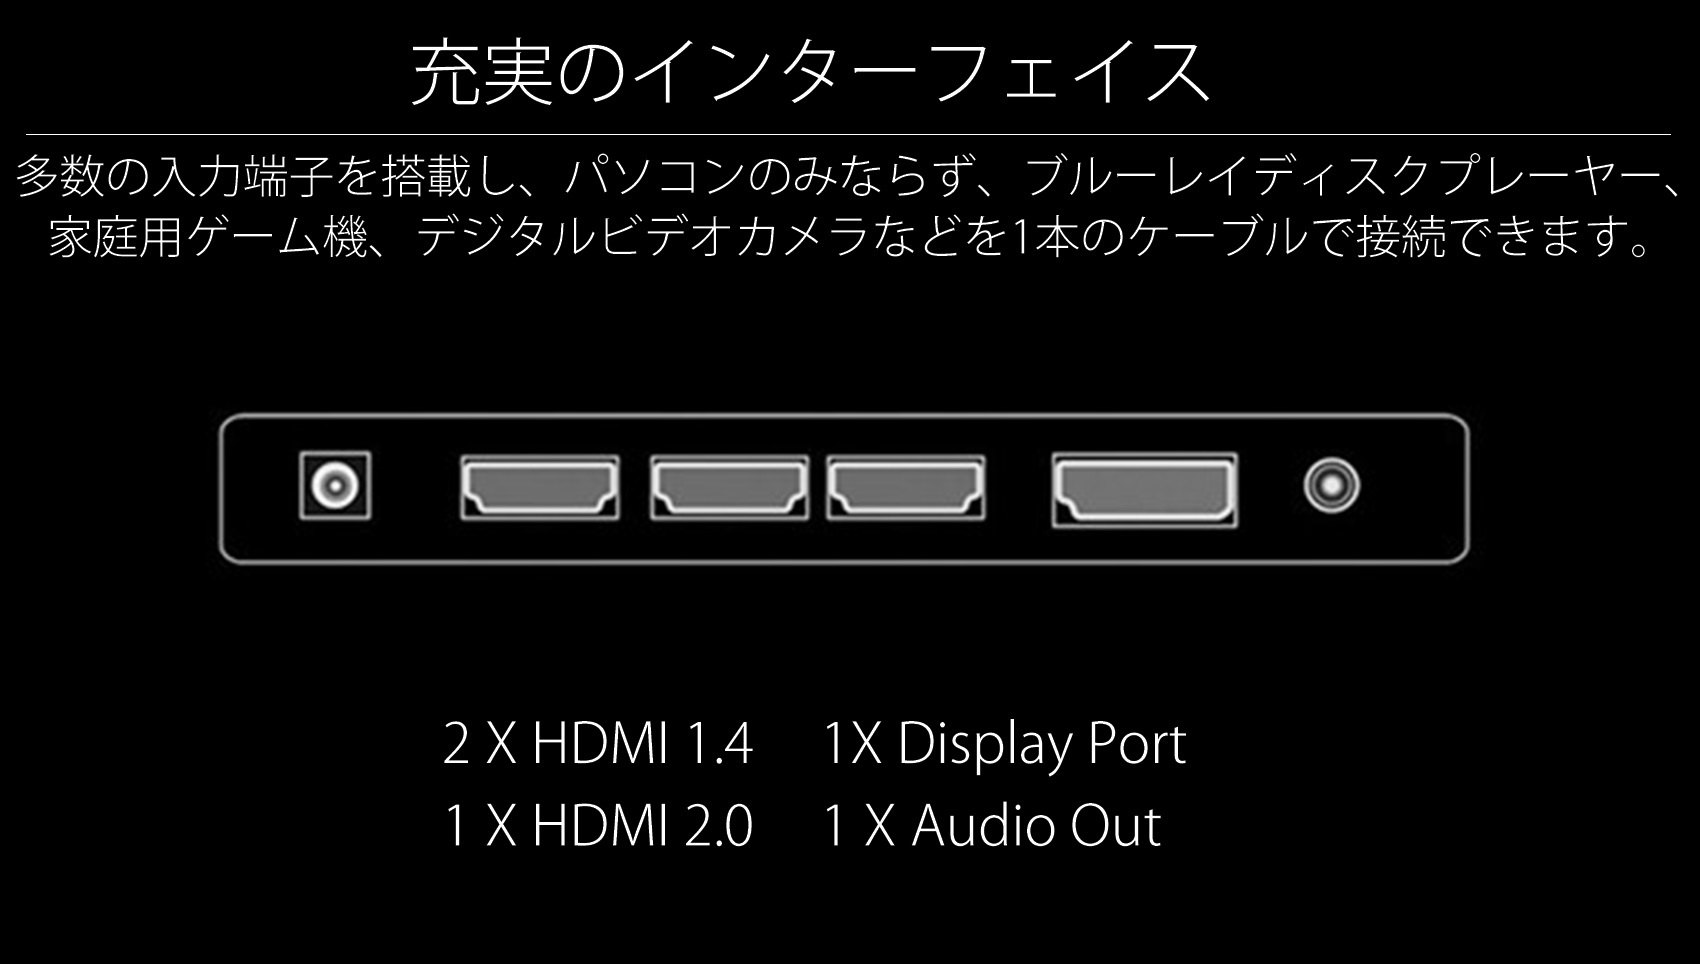 HDMI　インターフェース　2560×1440ドット表示に対応する機能付HDMI入力端子（HDCP対応）を搭載し、パソコンのみならず、ブルーレイディスクプレイヤー、家庭用ゲーム機、デジタルビデオカメラなどを1本のケーブルで接続できます。筐体カラーは、ブラックの1色となります